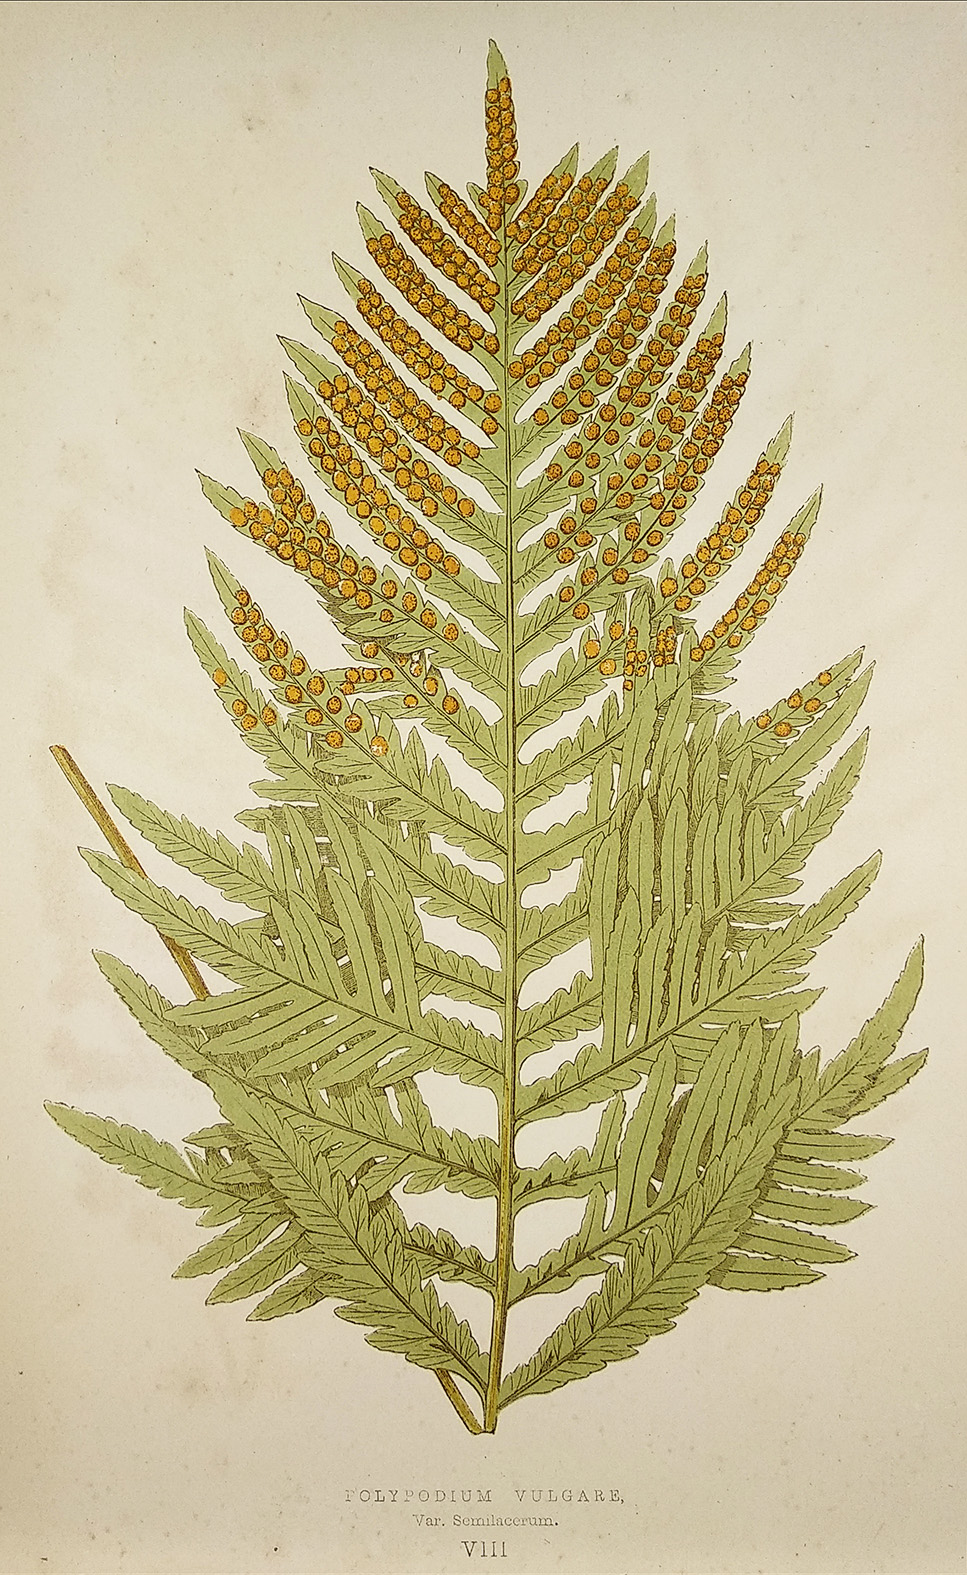 Polypodium Vulgare, Var. Semilacerum. [Brake Root Fern] - Antique Print from 1868